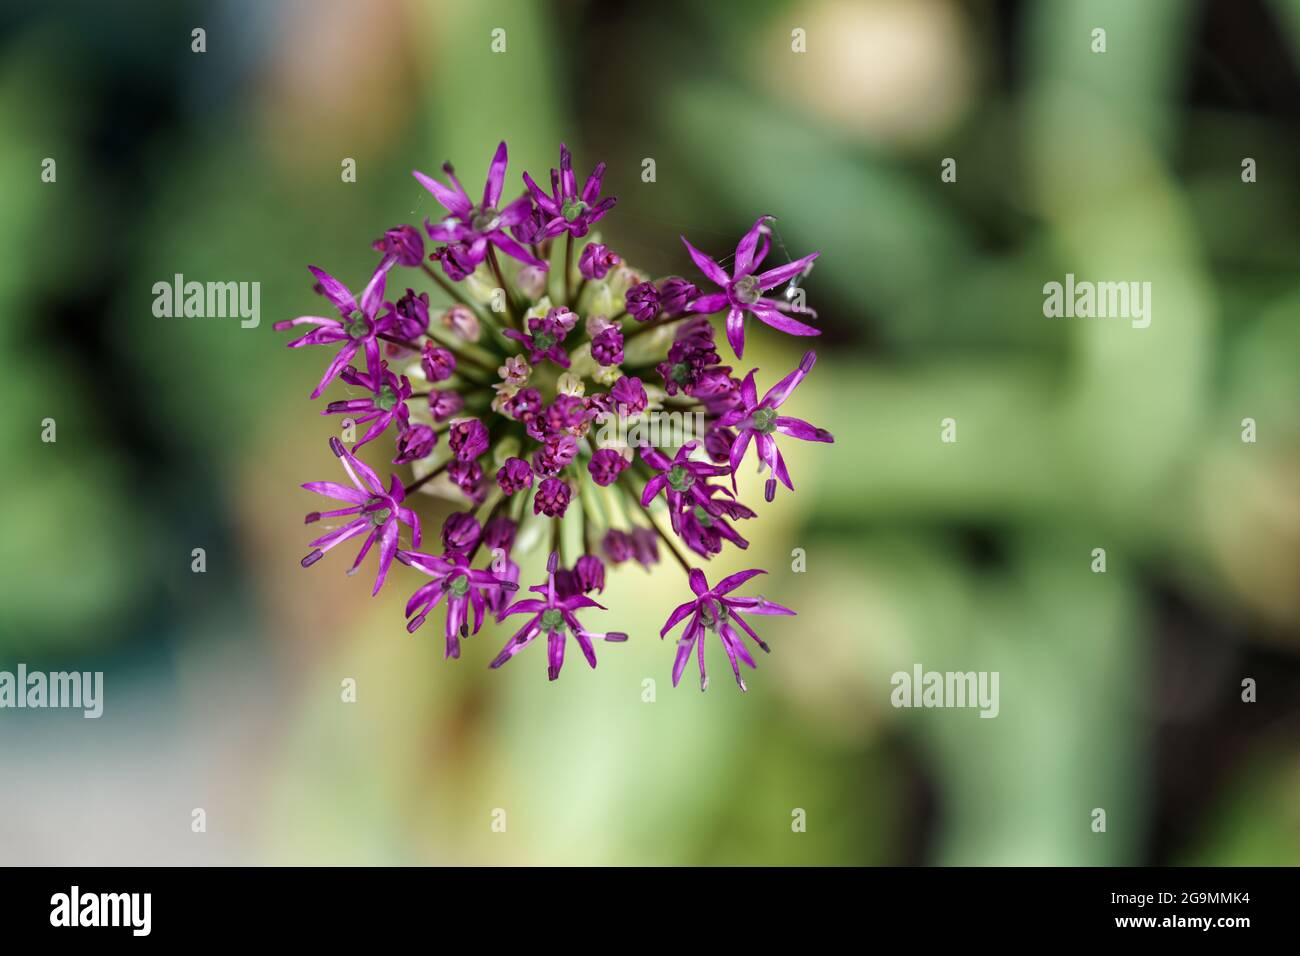 Close up of an allium - Allium hollandicum - flower head from above Stock Photo